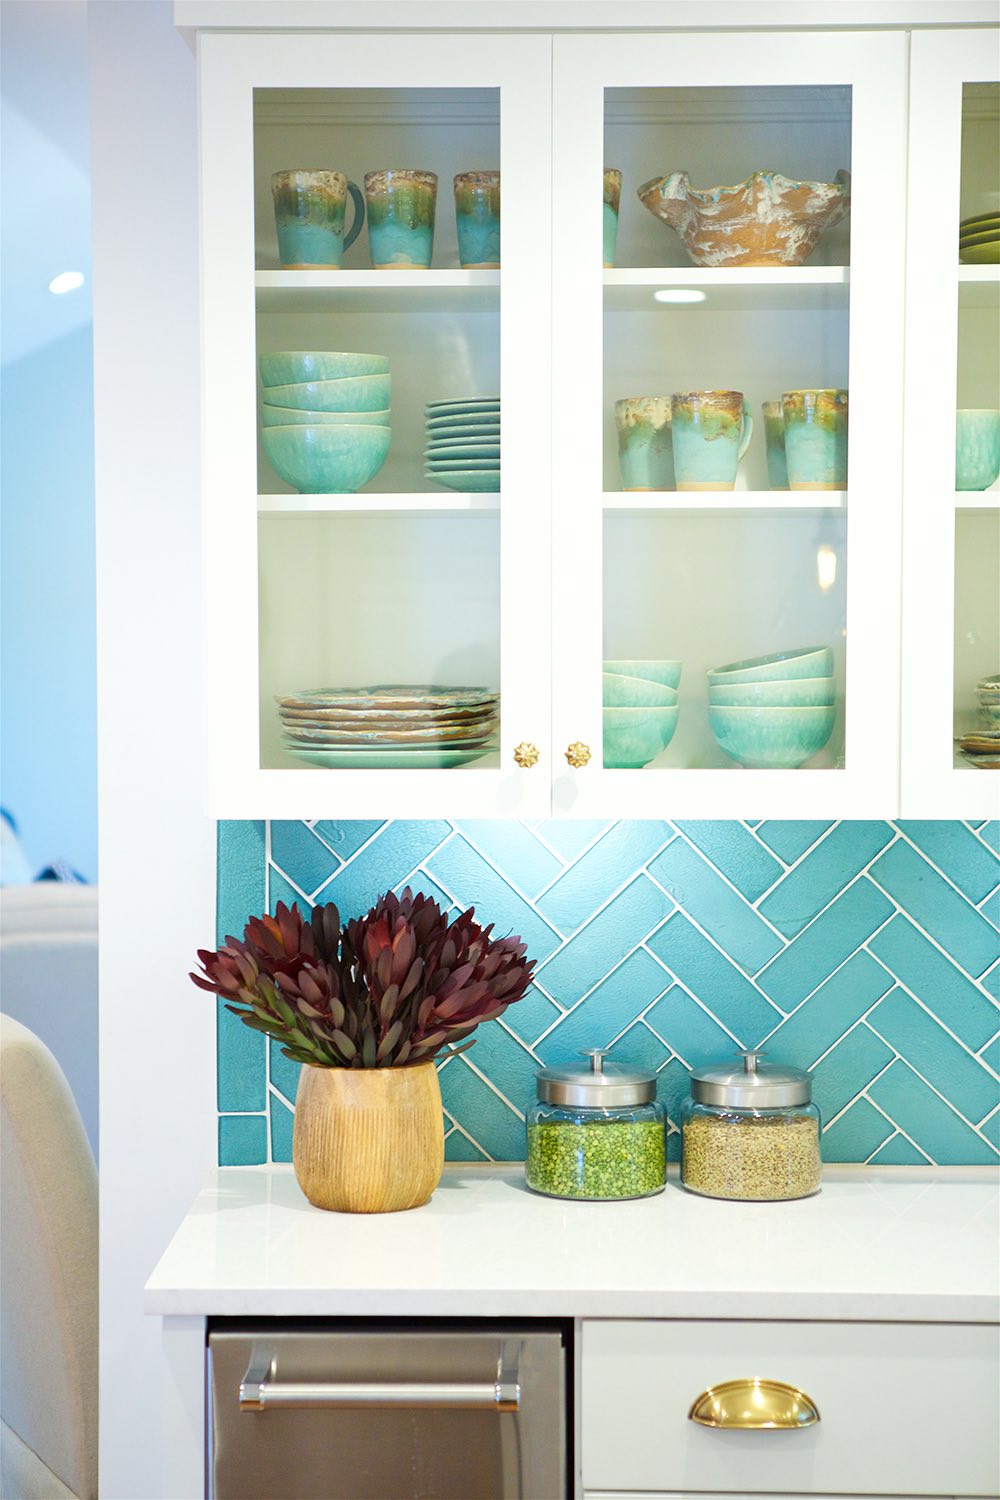 18 Brilliant Kitchen Backsplash Tile Ideas for Your Next Reno ...